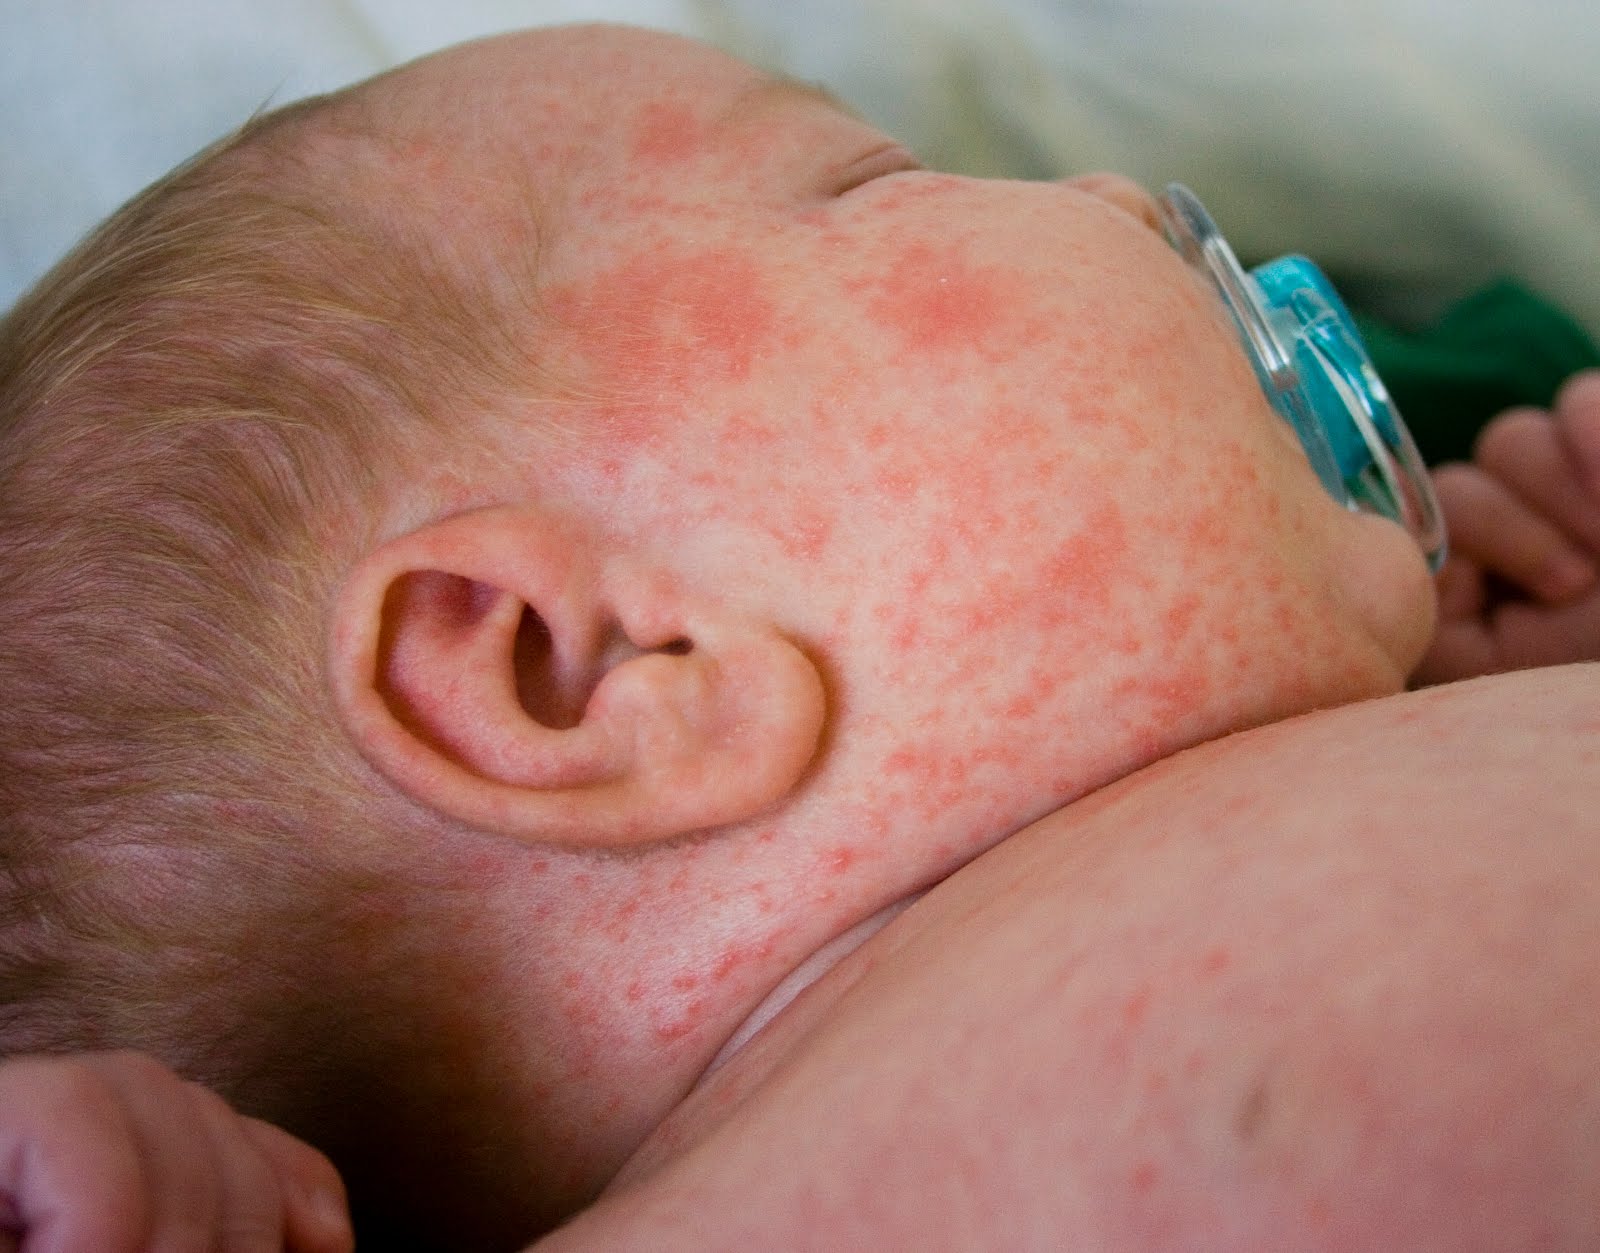 Erythema toxicum (newborn rash) | BabyCenter